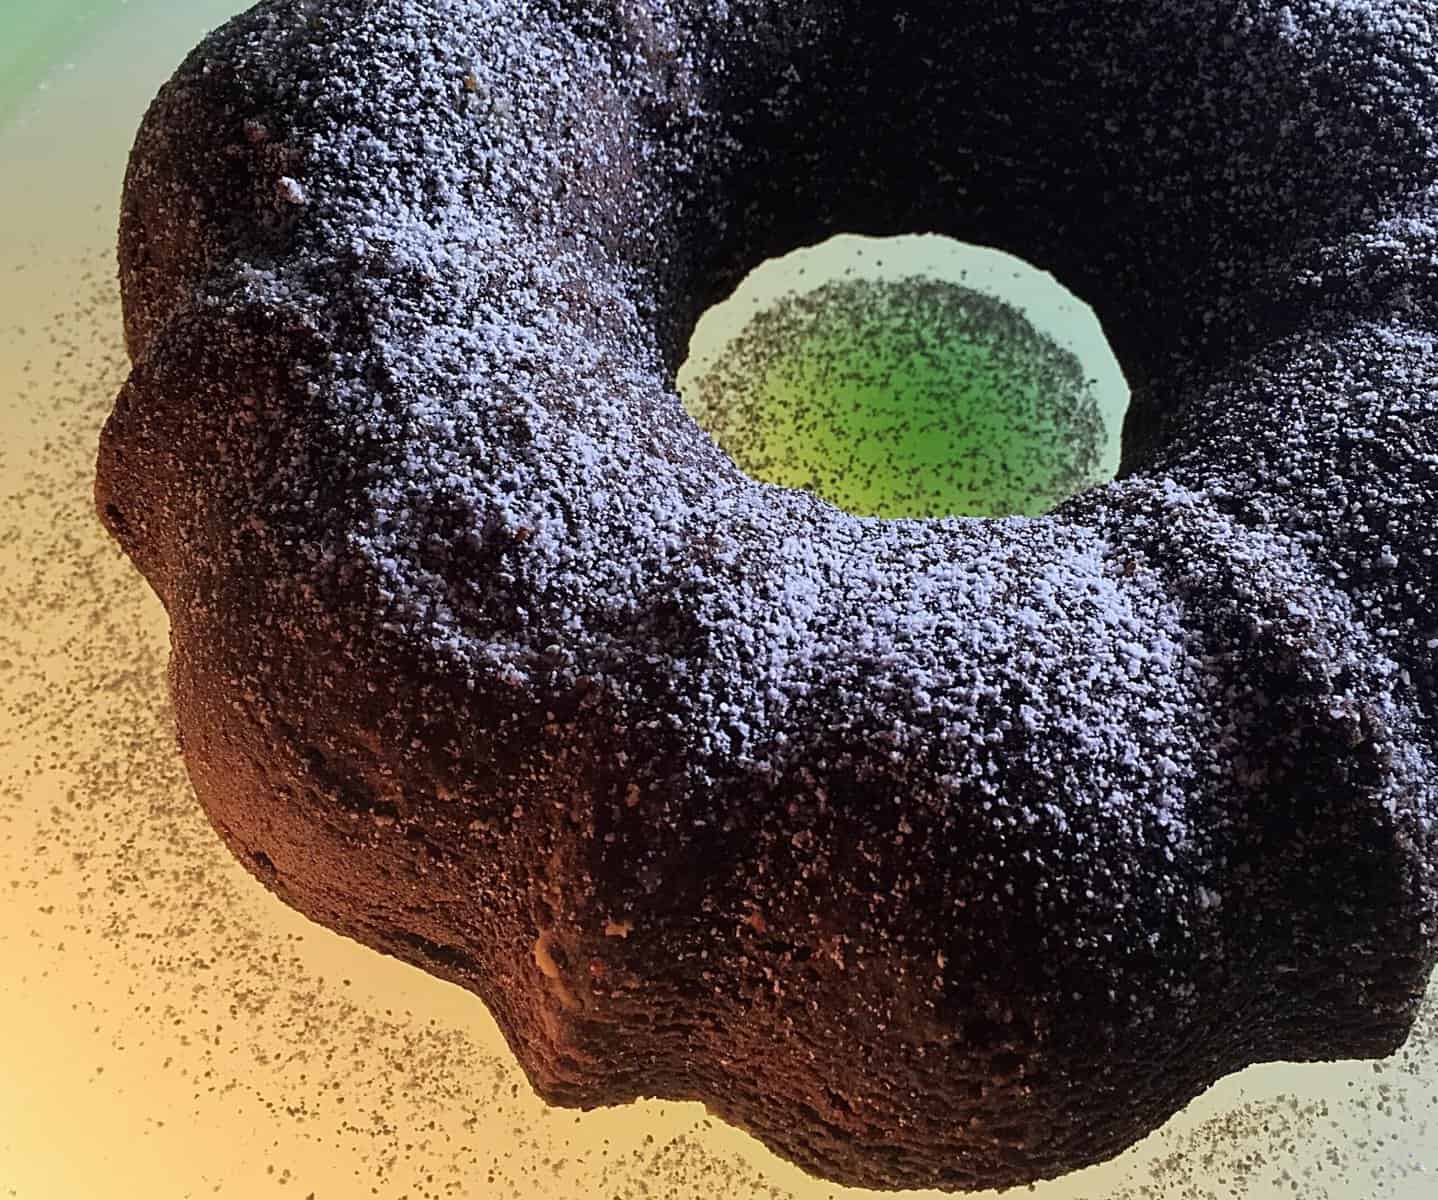  A slice of heaven: Gramercy Tavern Gingerbread Cake